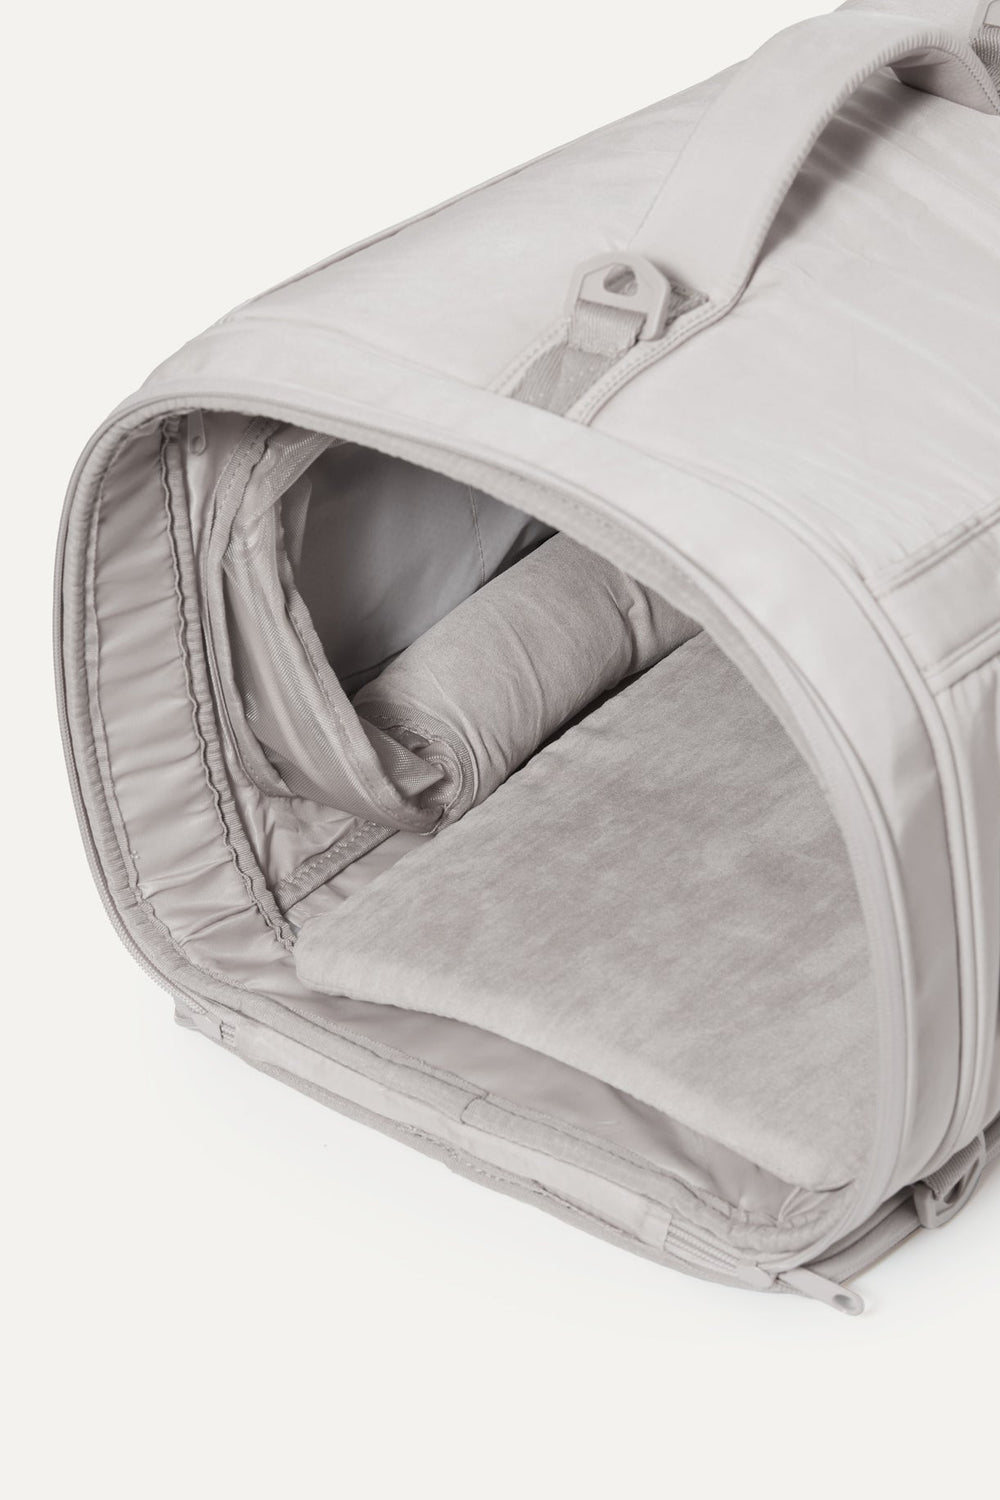 maxbone City Carrier Dog Bag - Grey One-Size